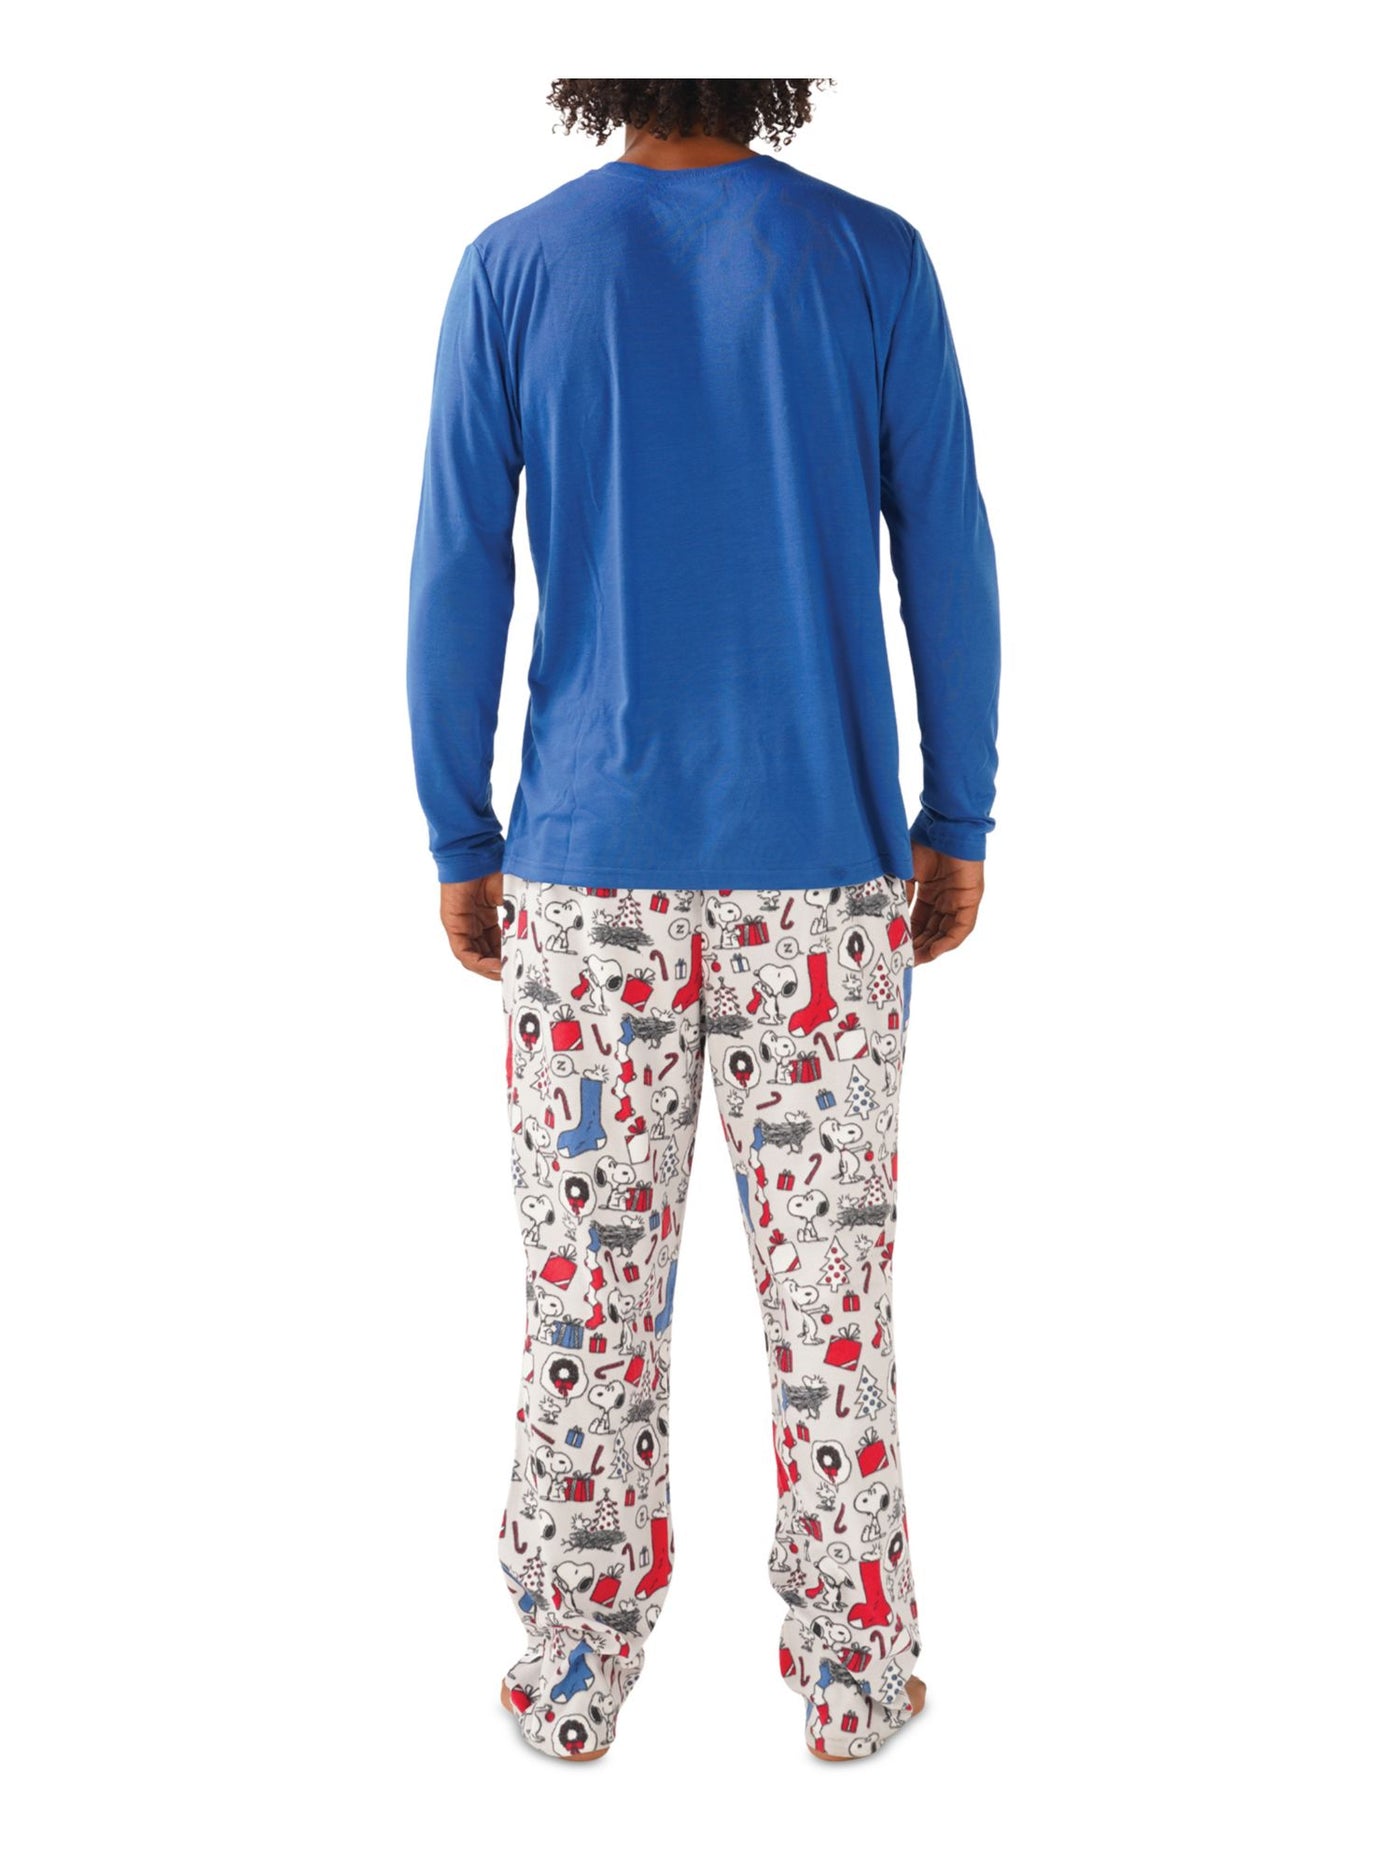 MUNKI MUNKI Mens Blue Graphic Top Elastic Band Long Sleeve Straight leg Pants Fleece Pajamas L